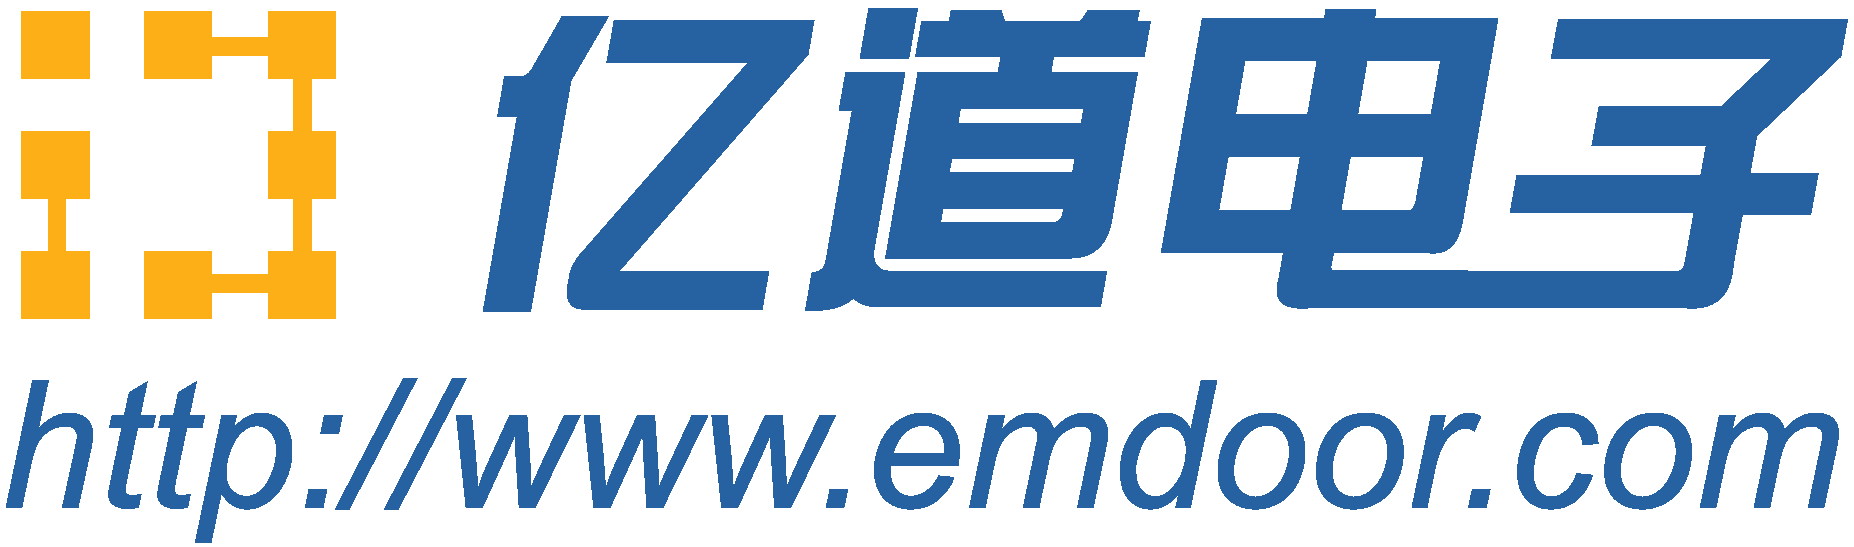 Emdoor Electronic Technology Co Ltd - Shanghai